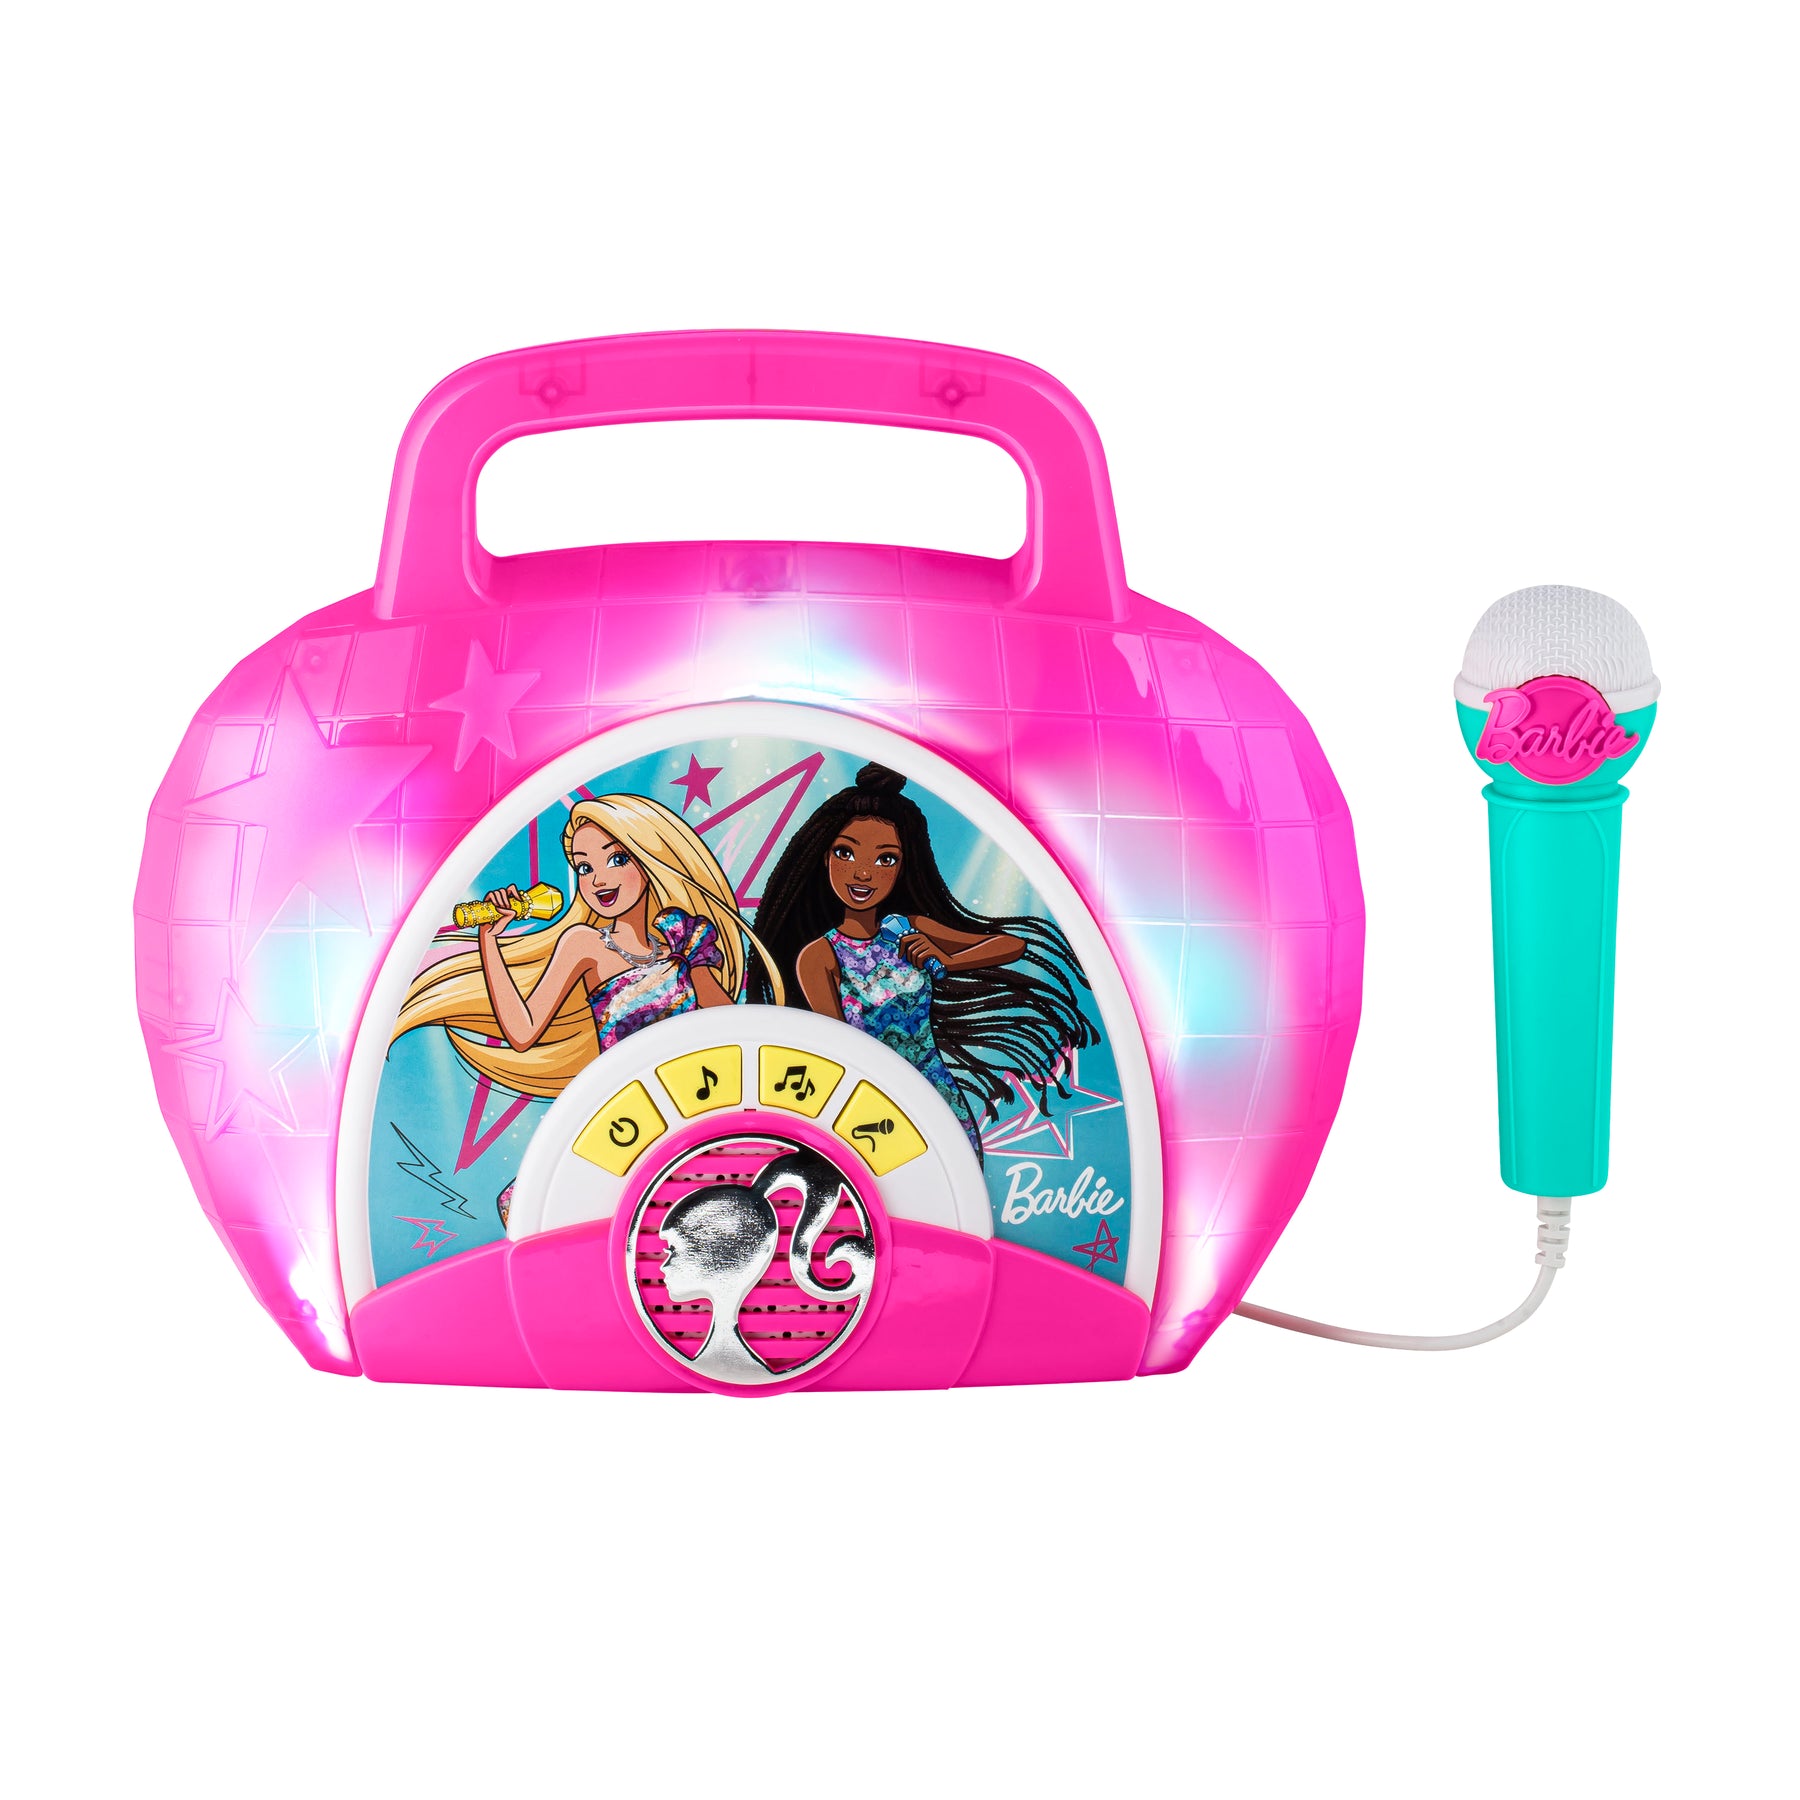 The Little Mermaid Karaoke Boombox Toy for Girls